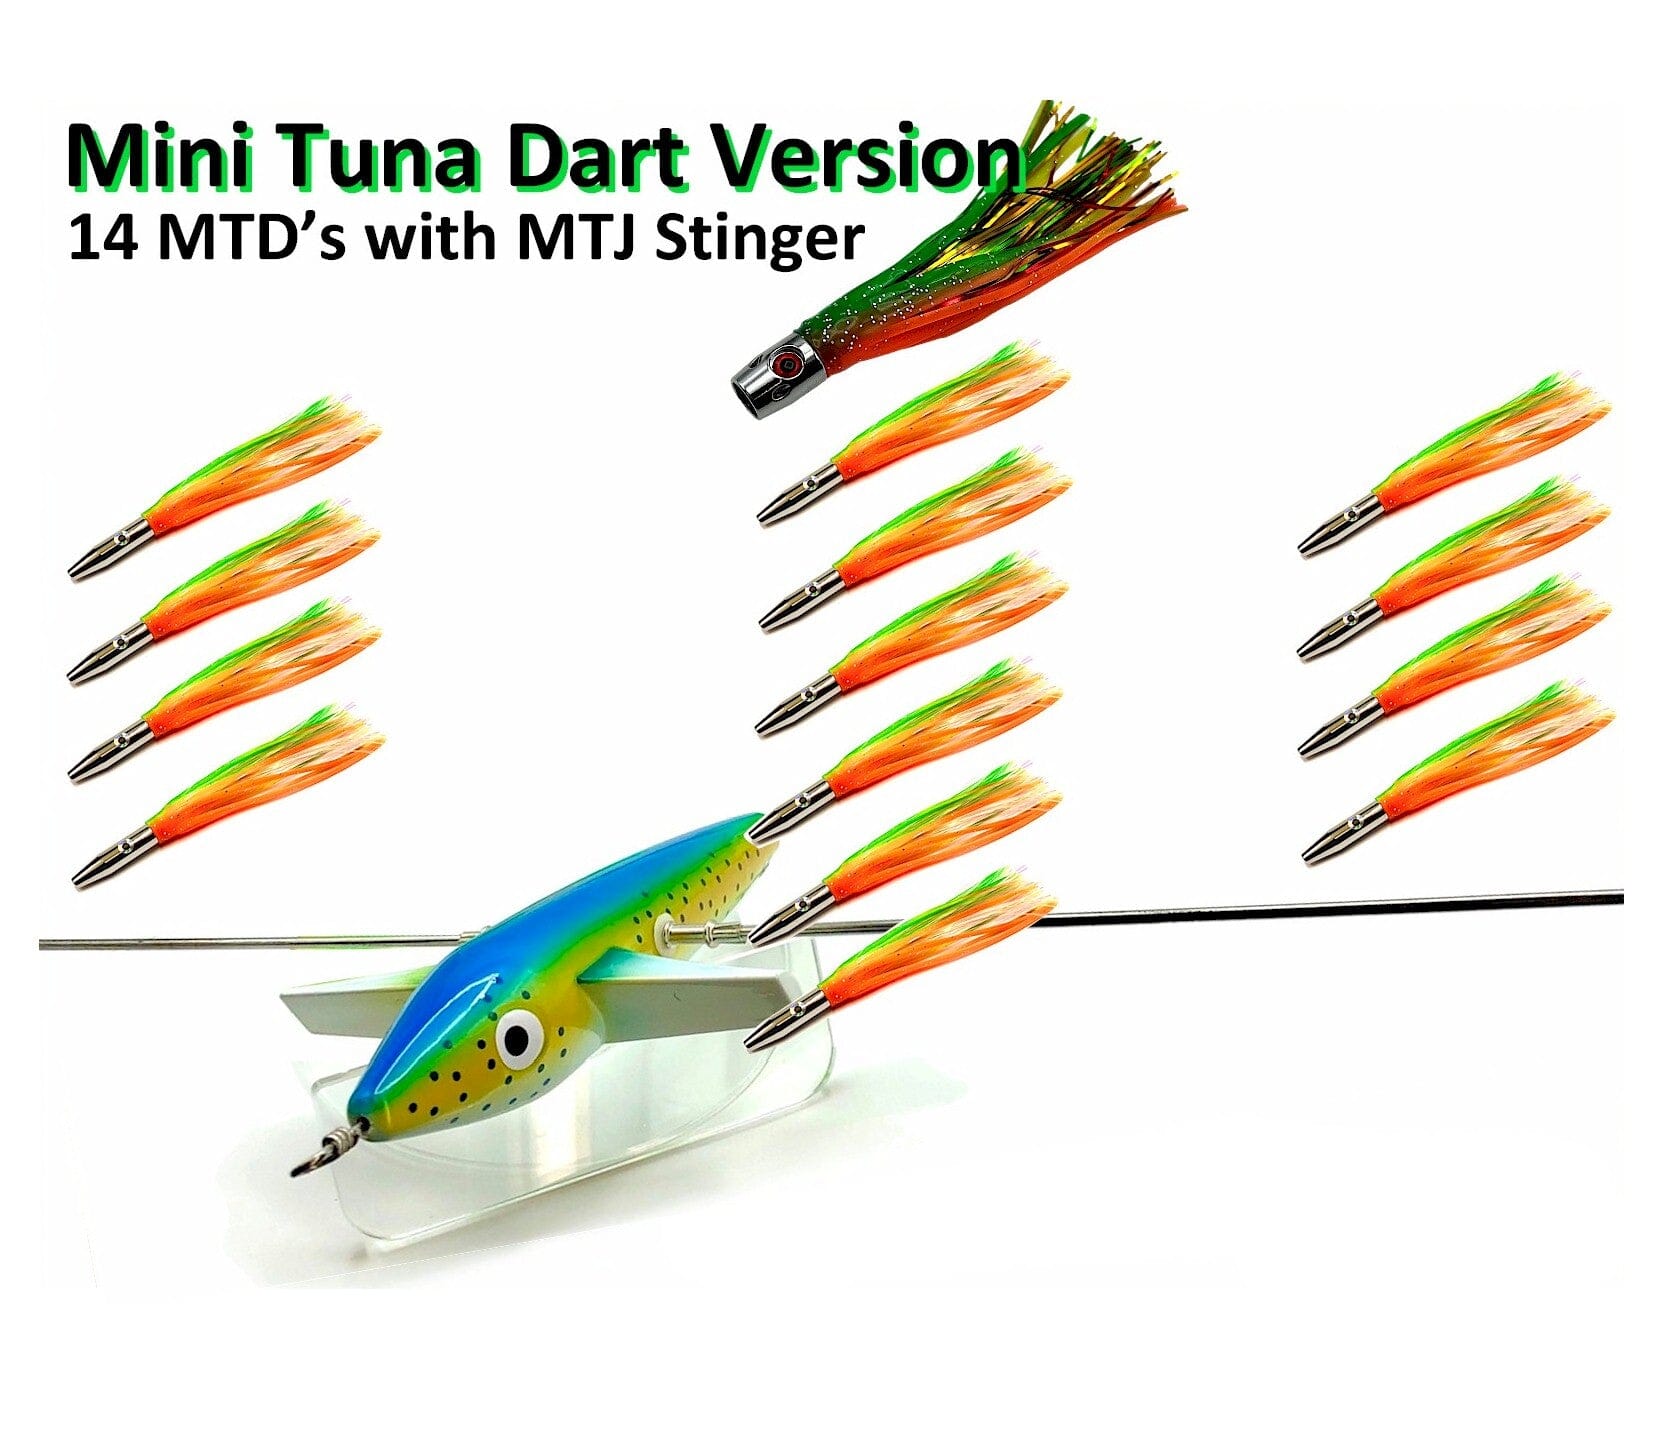 19" Sidewinder Directional Bars-Mini Tuna Dart Version Daisy Chains & Multi Bait Rigs Tormenter Ocean 